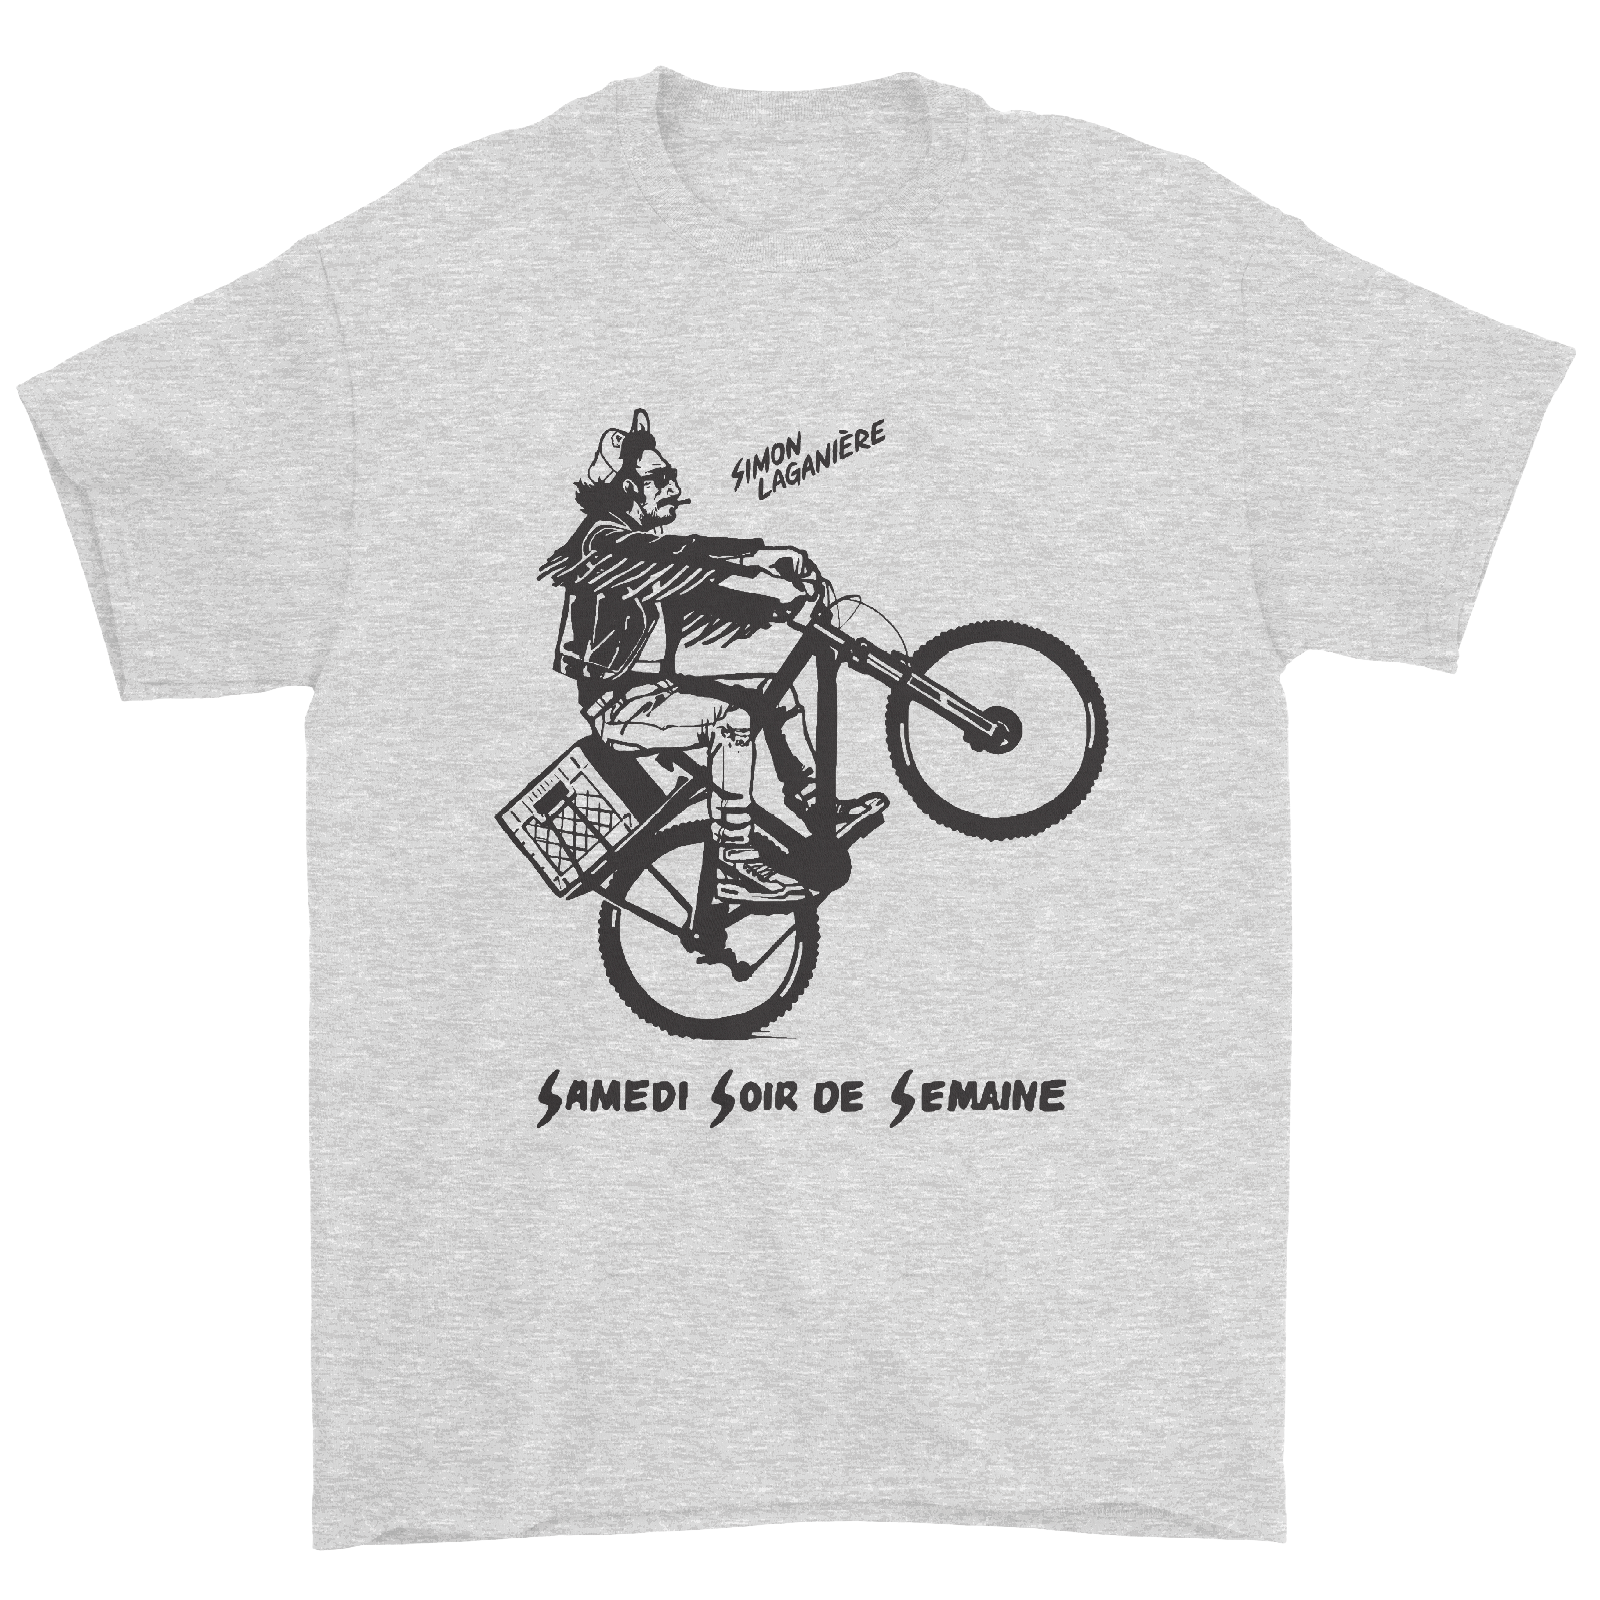 Simon Laganière - Saturday weeknight - Gray T-shirt